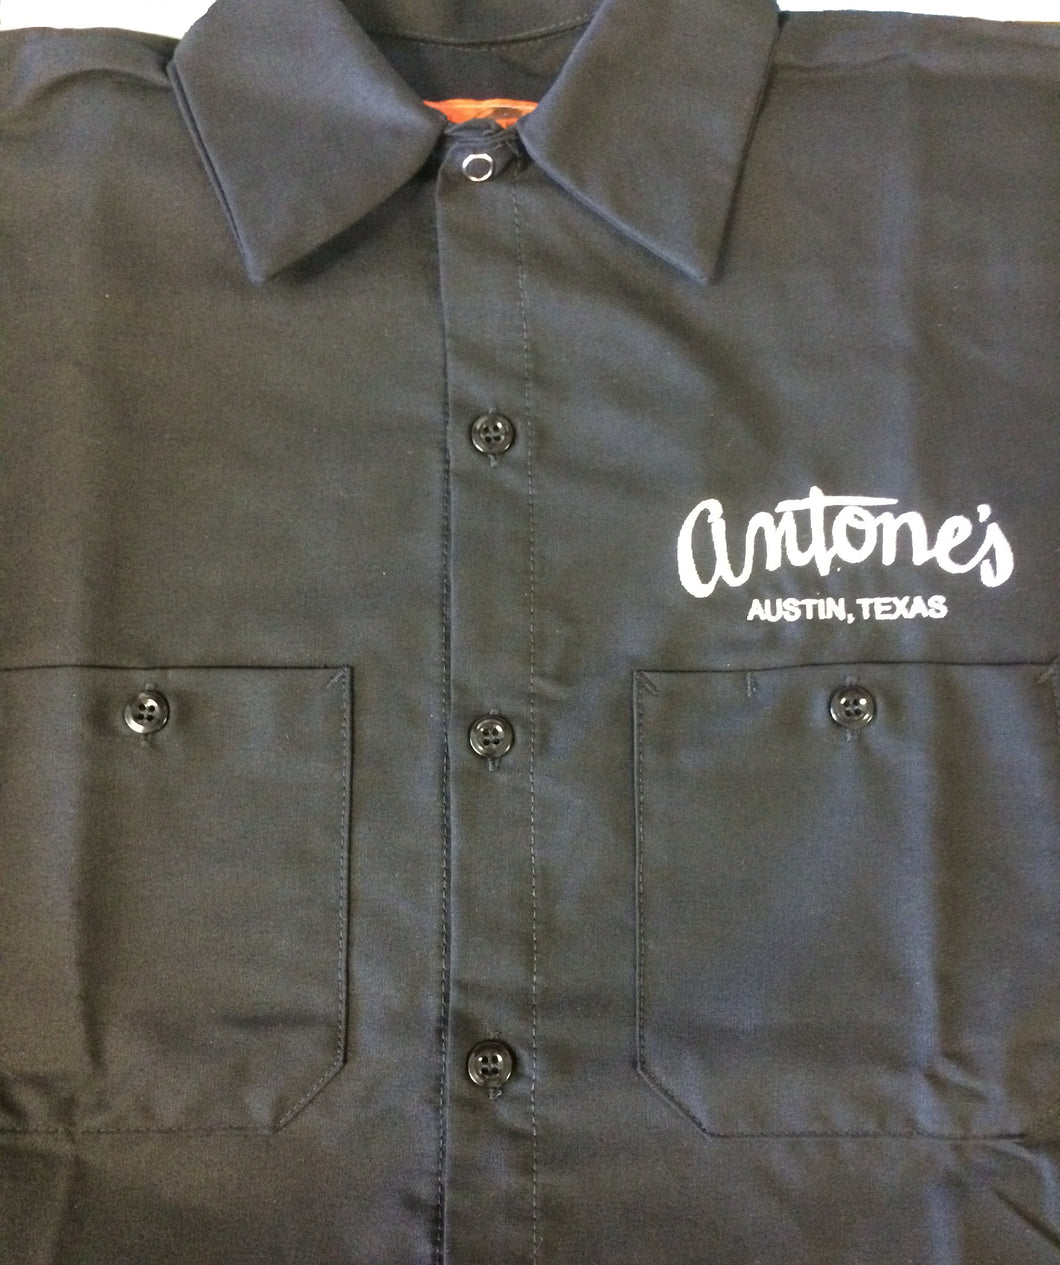 Antone's Work Shirt, Black, 3xl - T-shirt